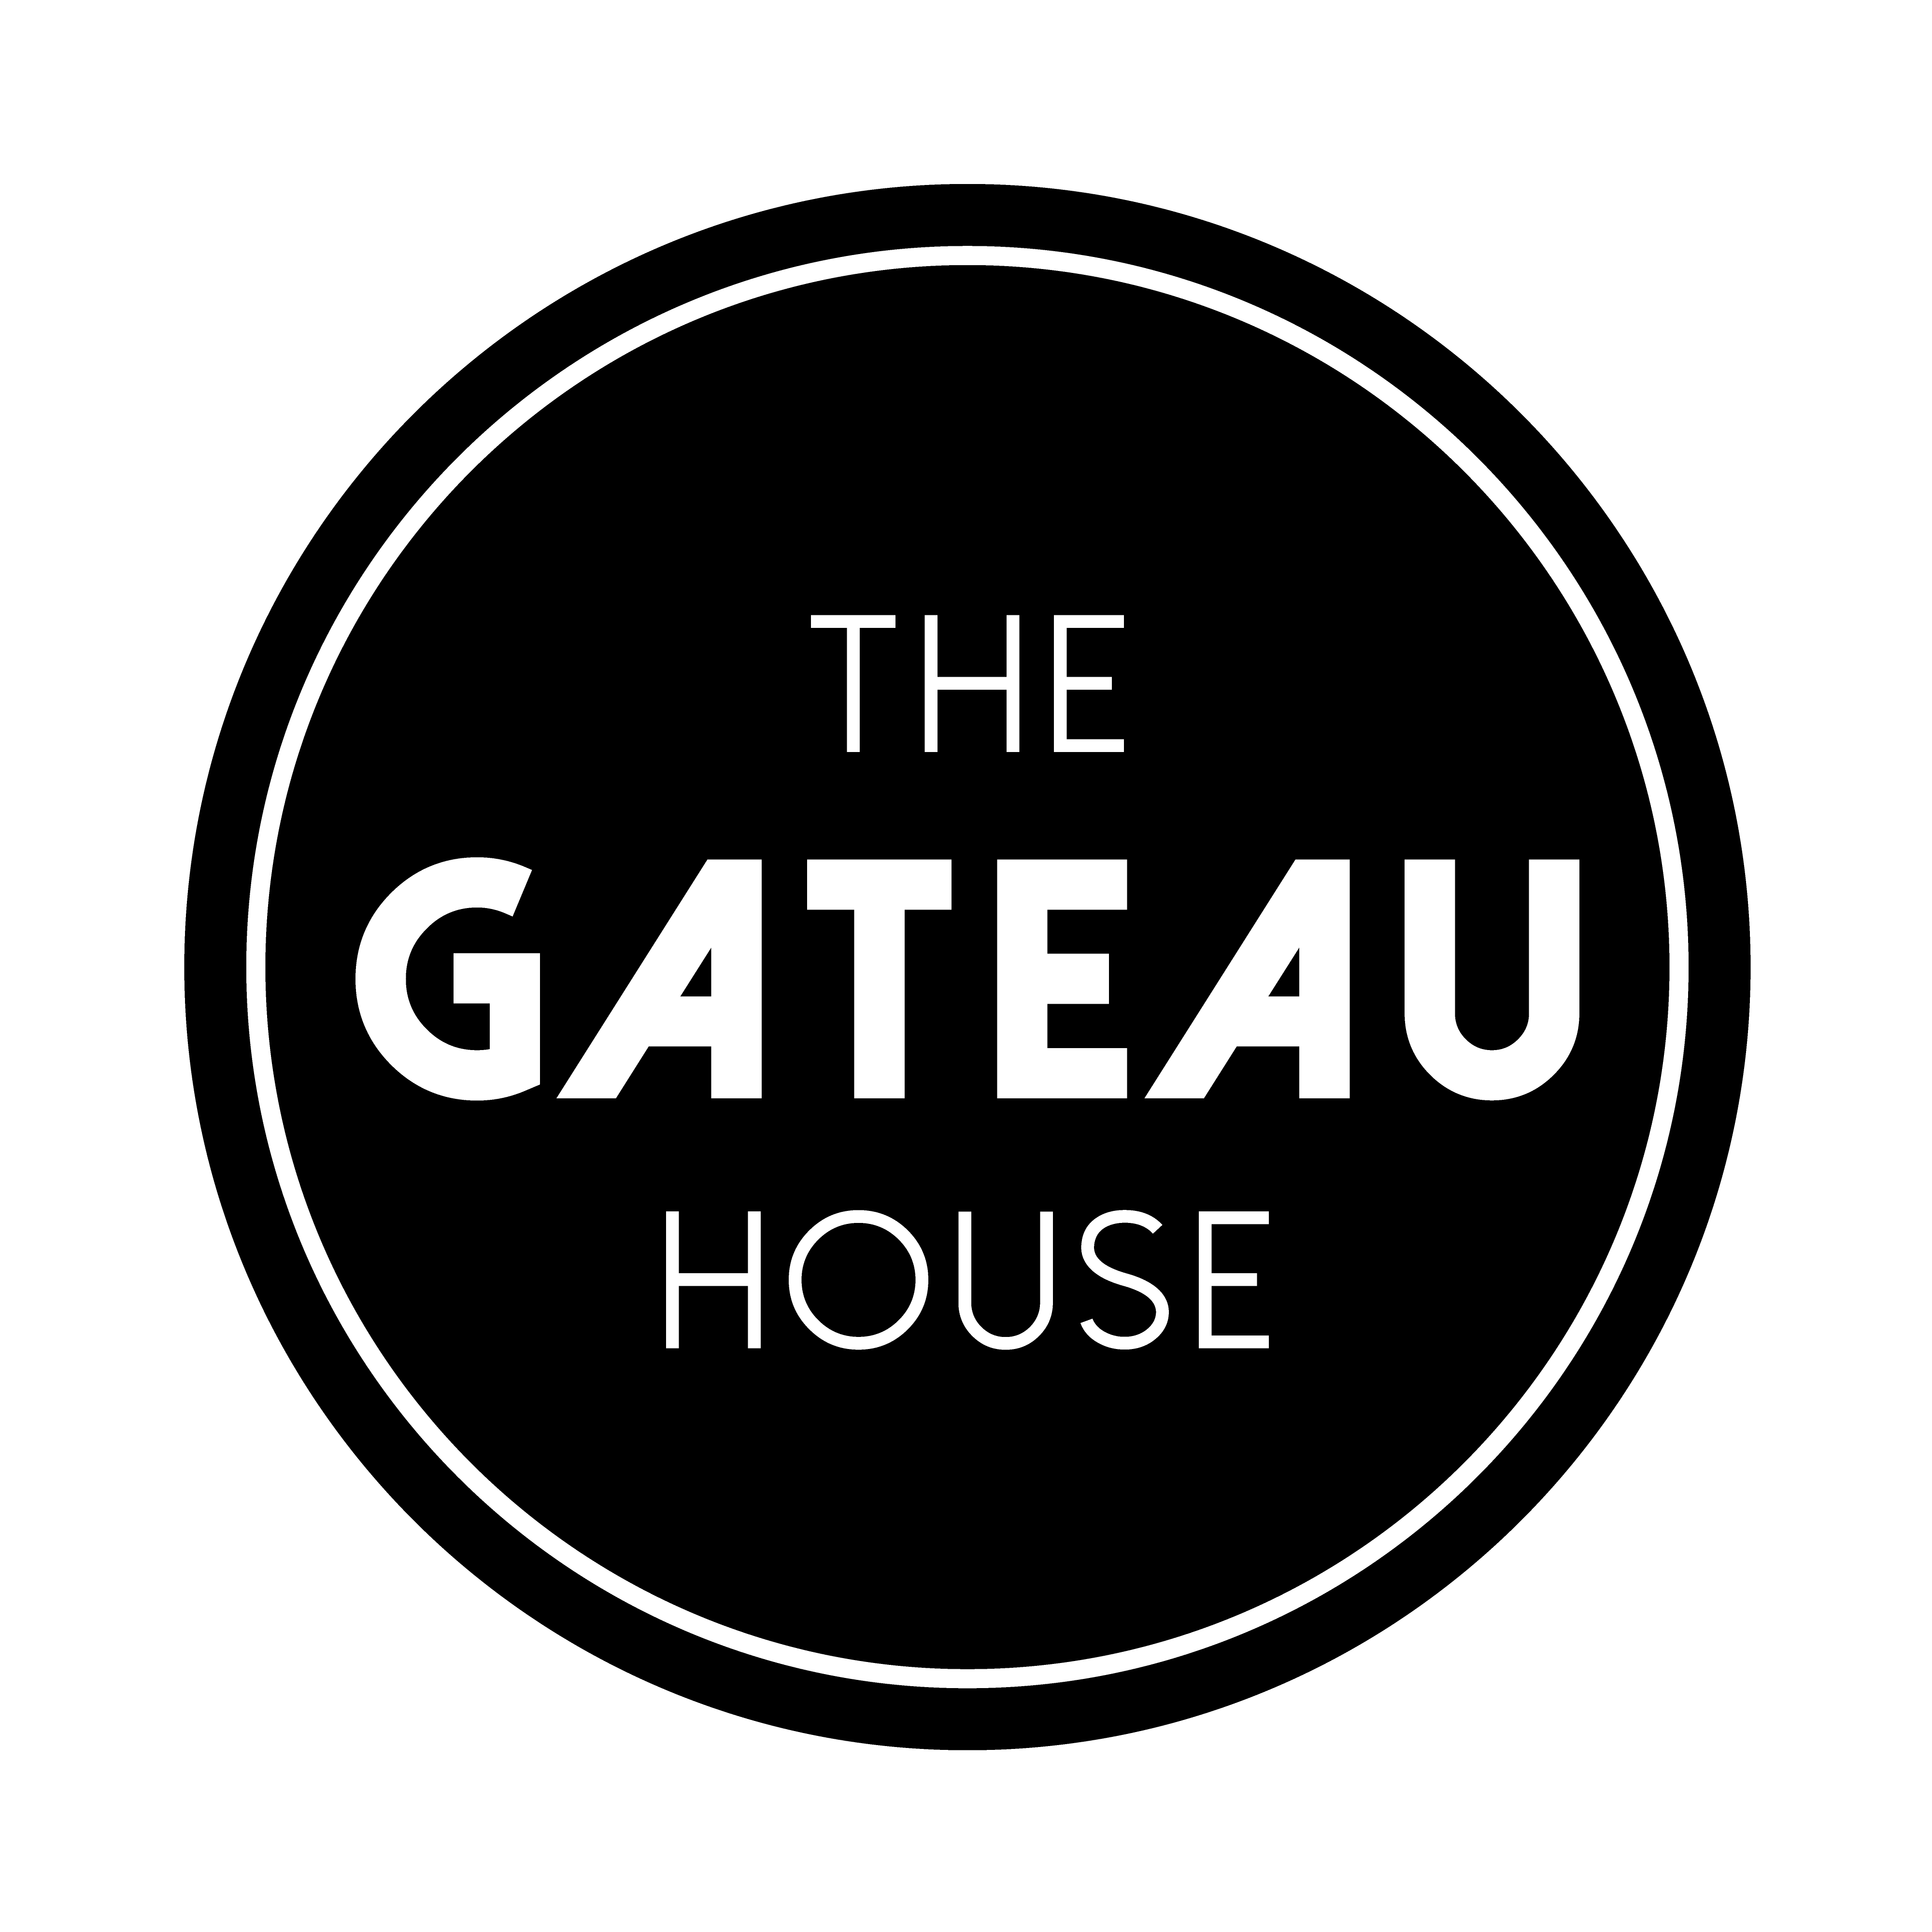 The Gateau House